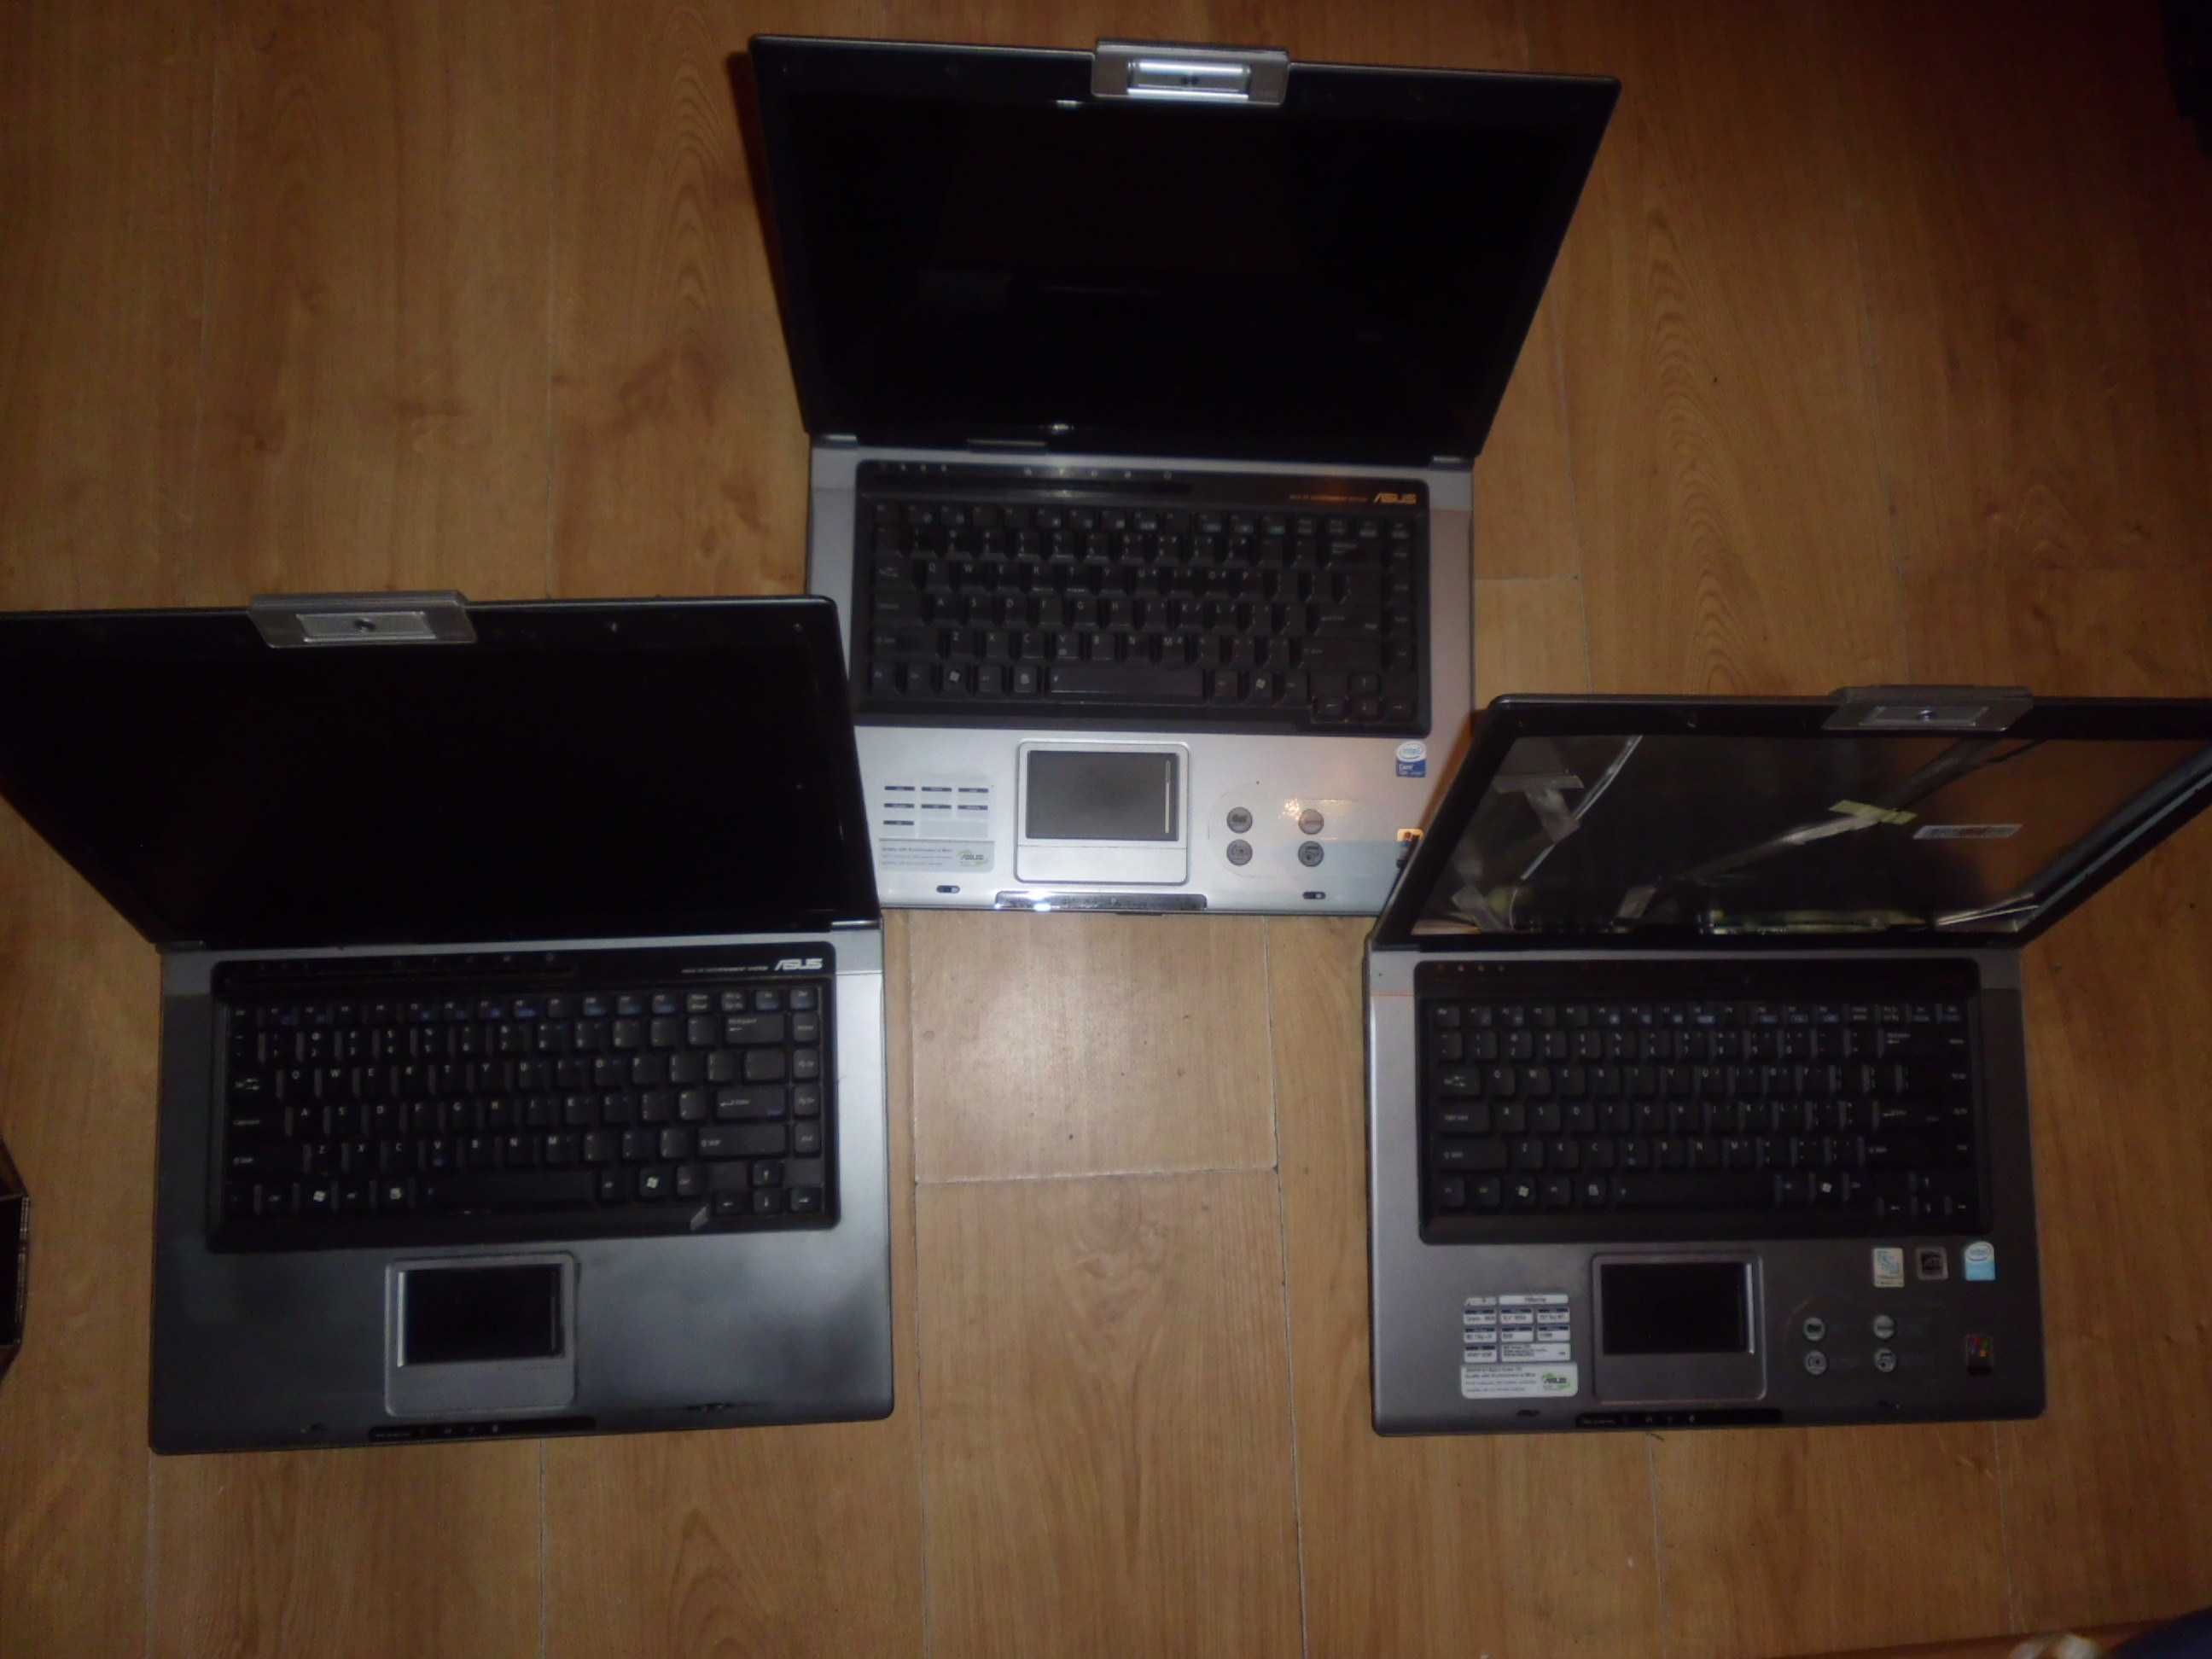 laptopy asus 3szt. za 120zł. wysyłka gratis